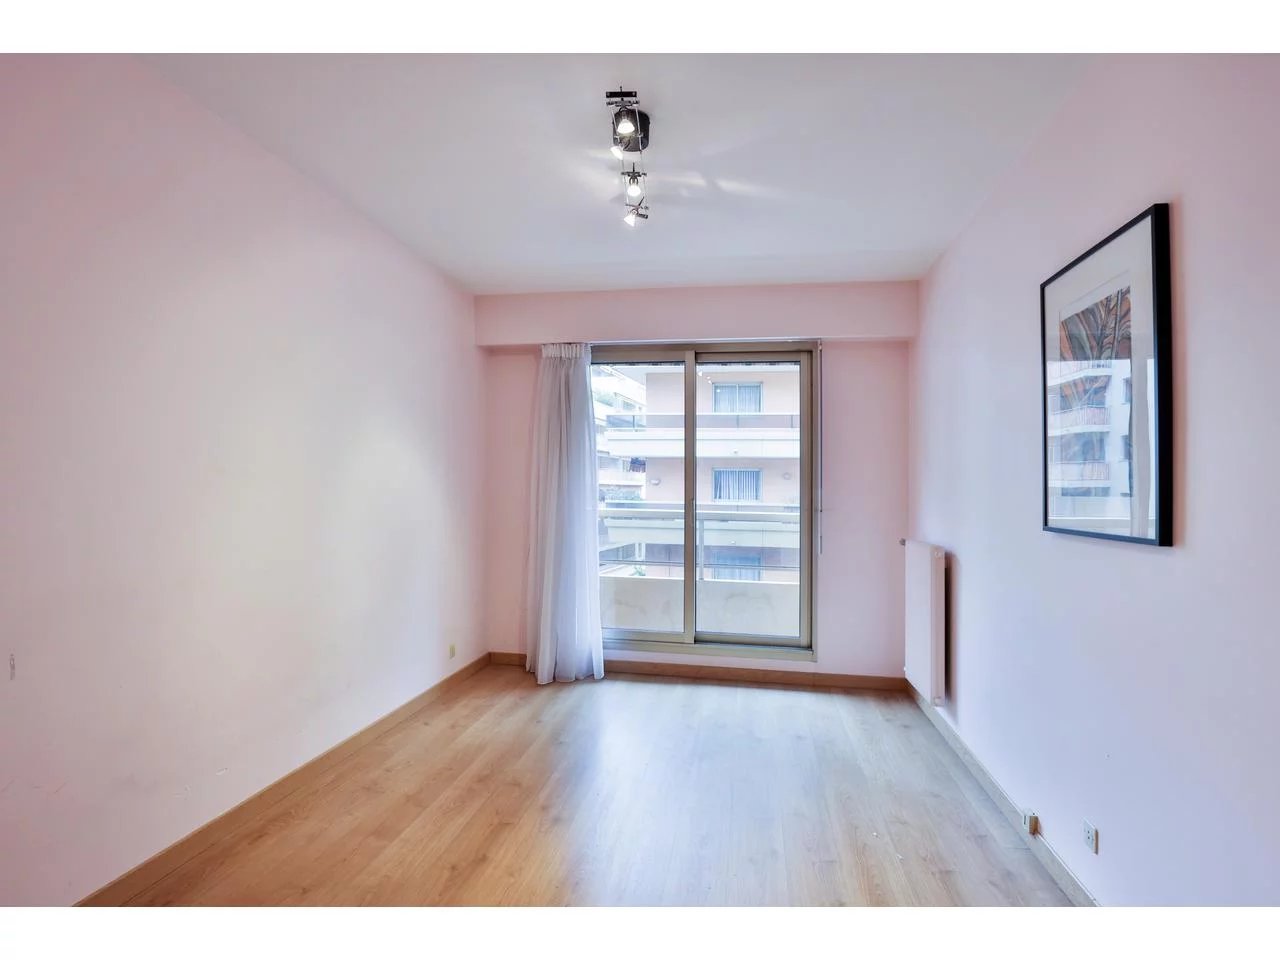 Appartement  3 Locali 81.11m2  In vendita   410 000 €